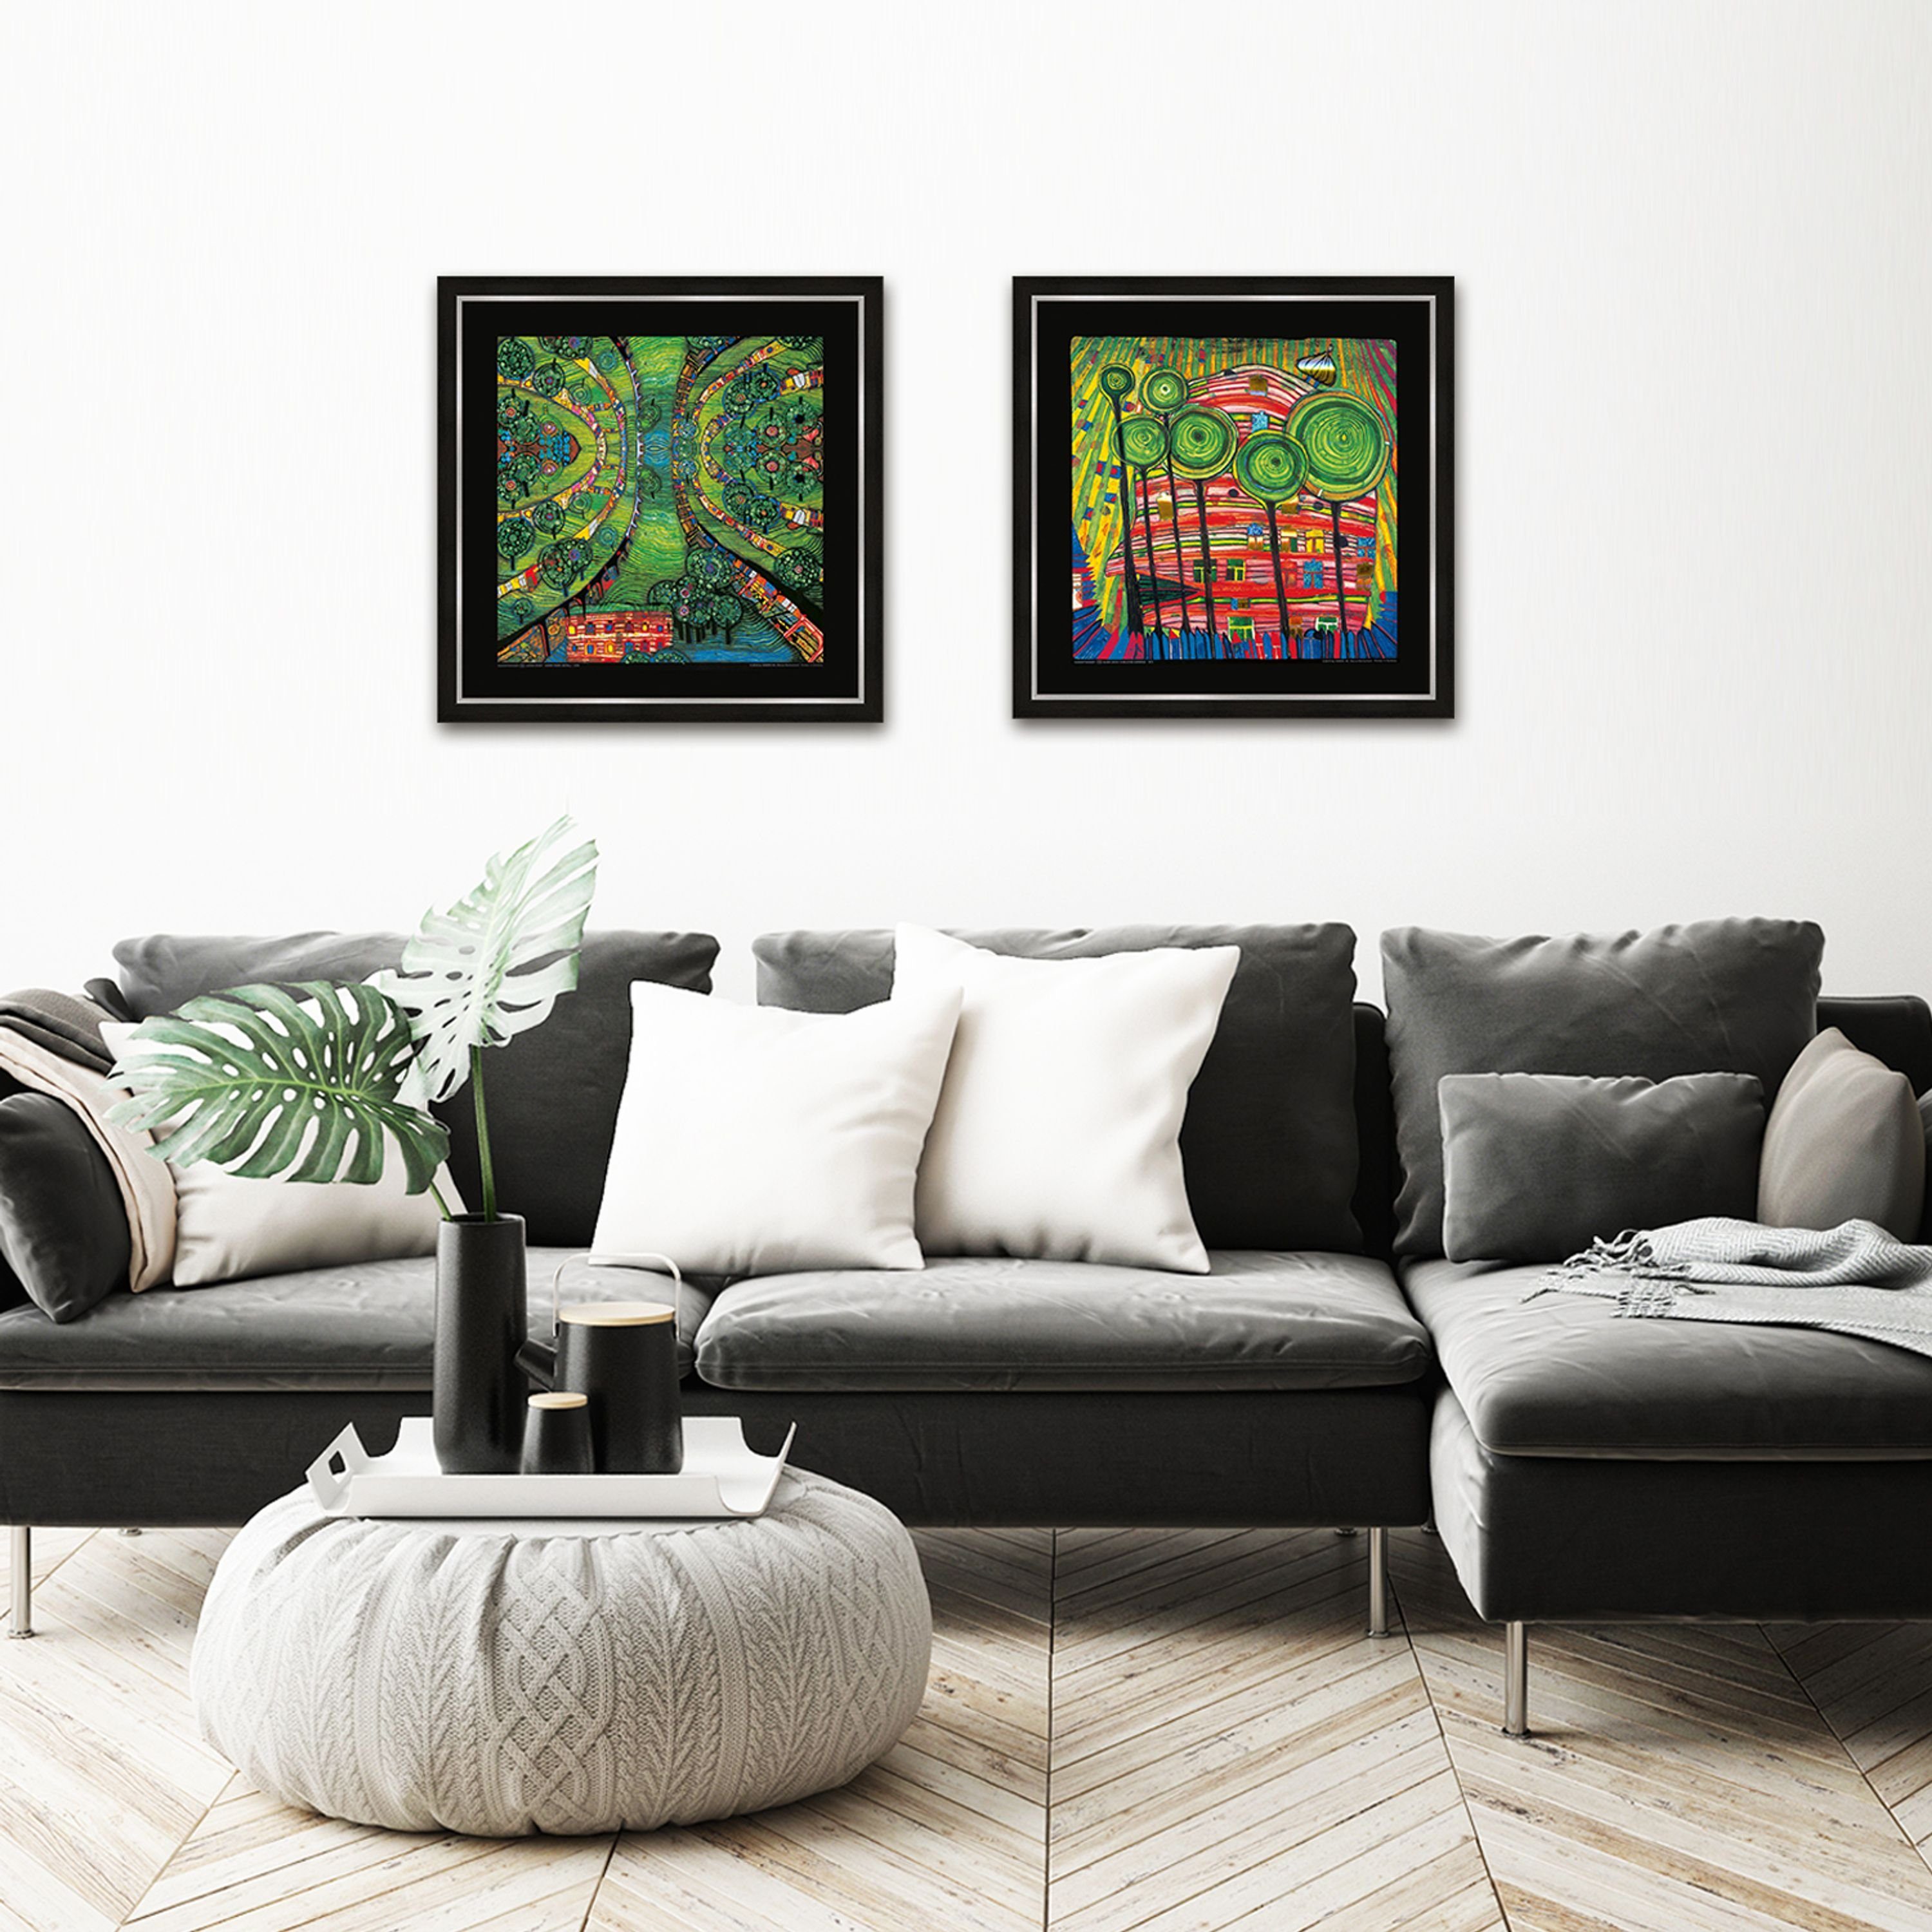 mit Poster Wandbild Rahmen gerahmt Hundertwasser / 53x53cm Bild Rahmen / artissimo mit Bild